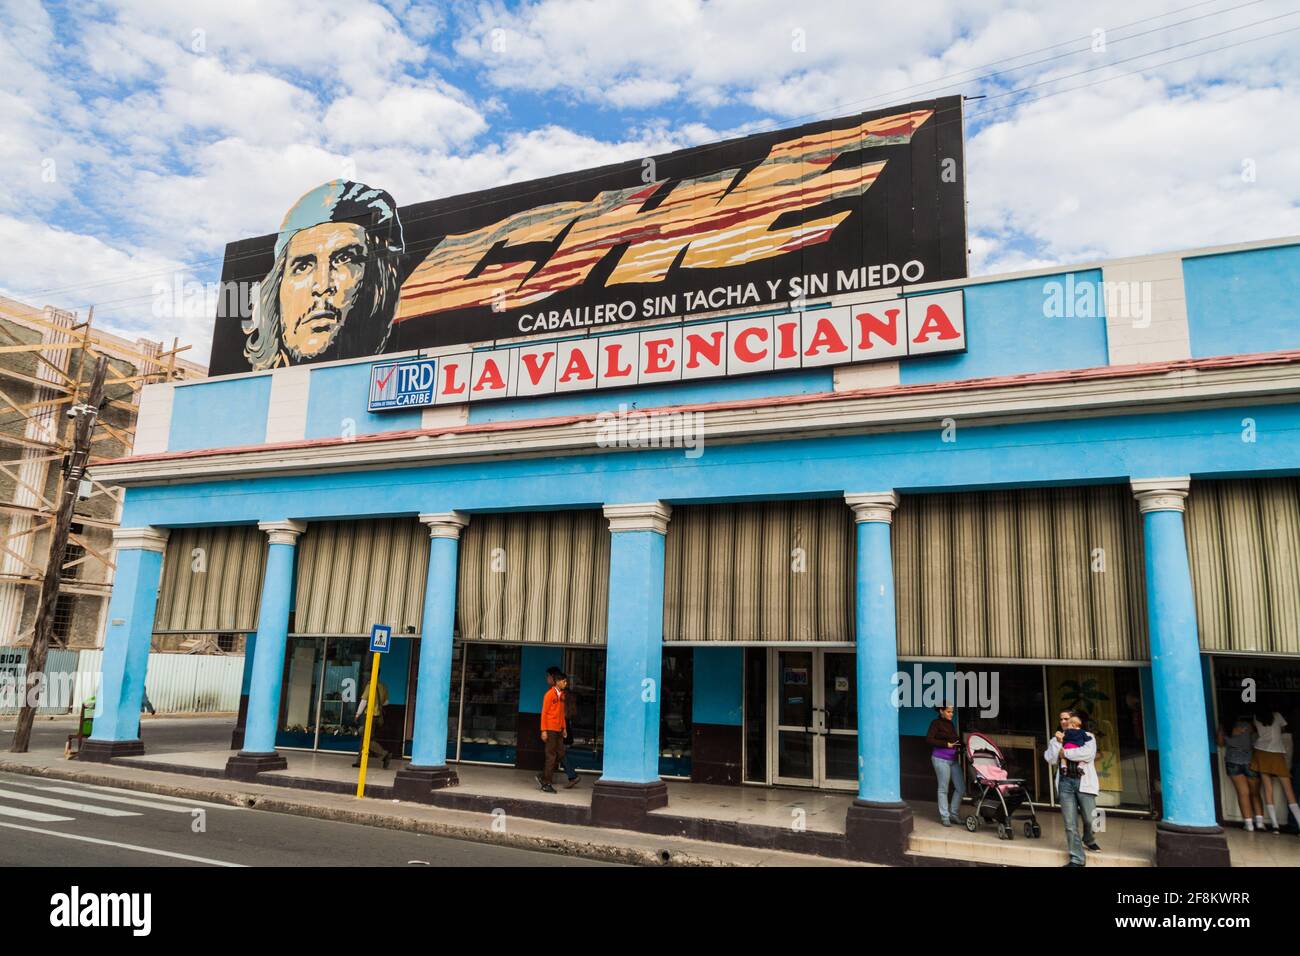 CIENFUEGOS, CUBA - 10 FÉVRIER 2016 : fresque de propagande à la rue Paseo del Prado à Cienfuegos, Cuba. Il dit: Che: Gentleman sans défauts et craintes. Banque D'Images